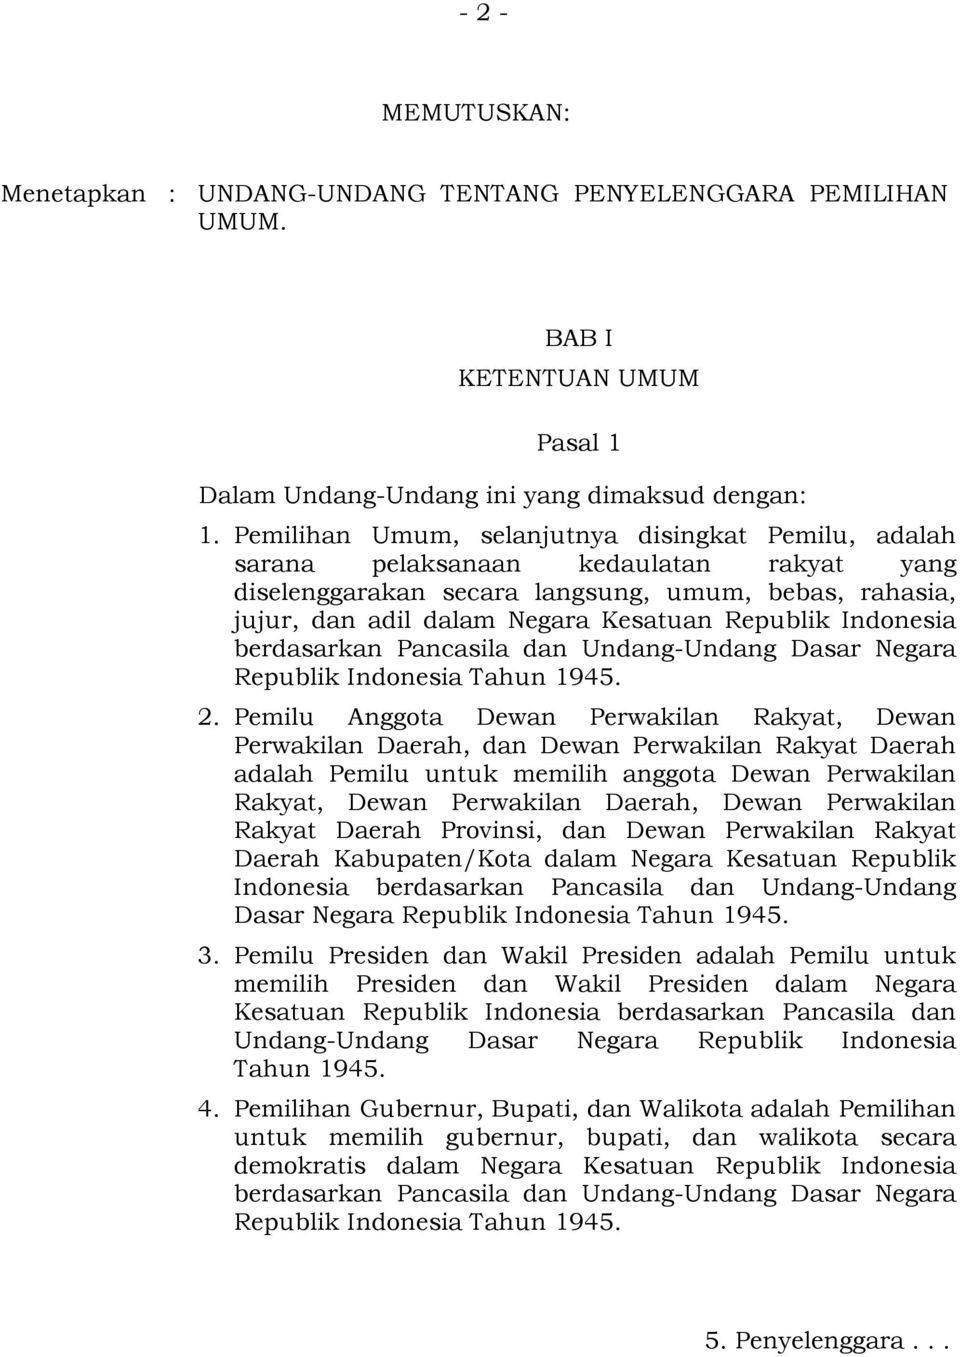 Indonesia berdasarkan Pancasila dan Undang-Undang Dasar Negara Republik Indonesia Tahun 1945. 2.